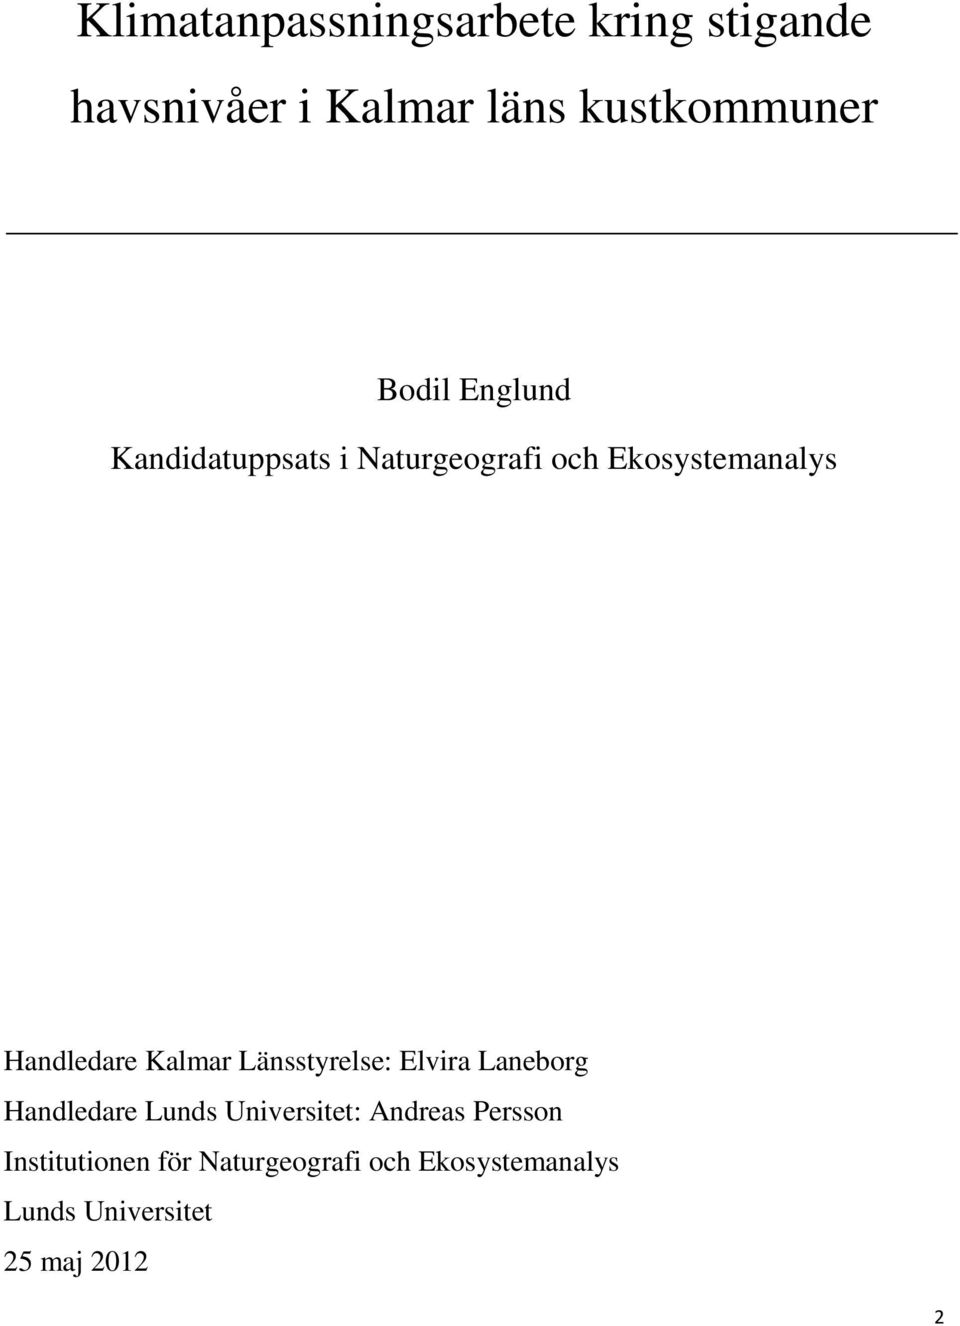 Kalmar Länsstyrelse: Elvira Laneborg Handledare Lunds Universitet: Andreas